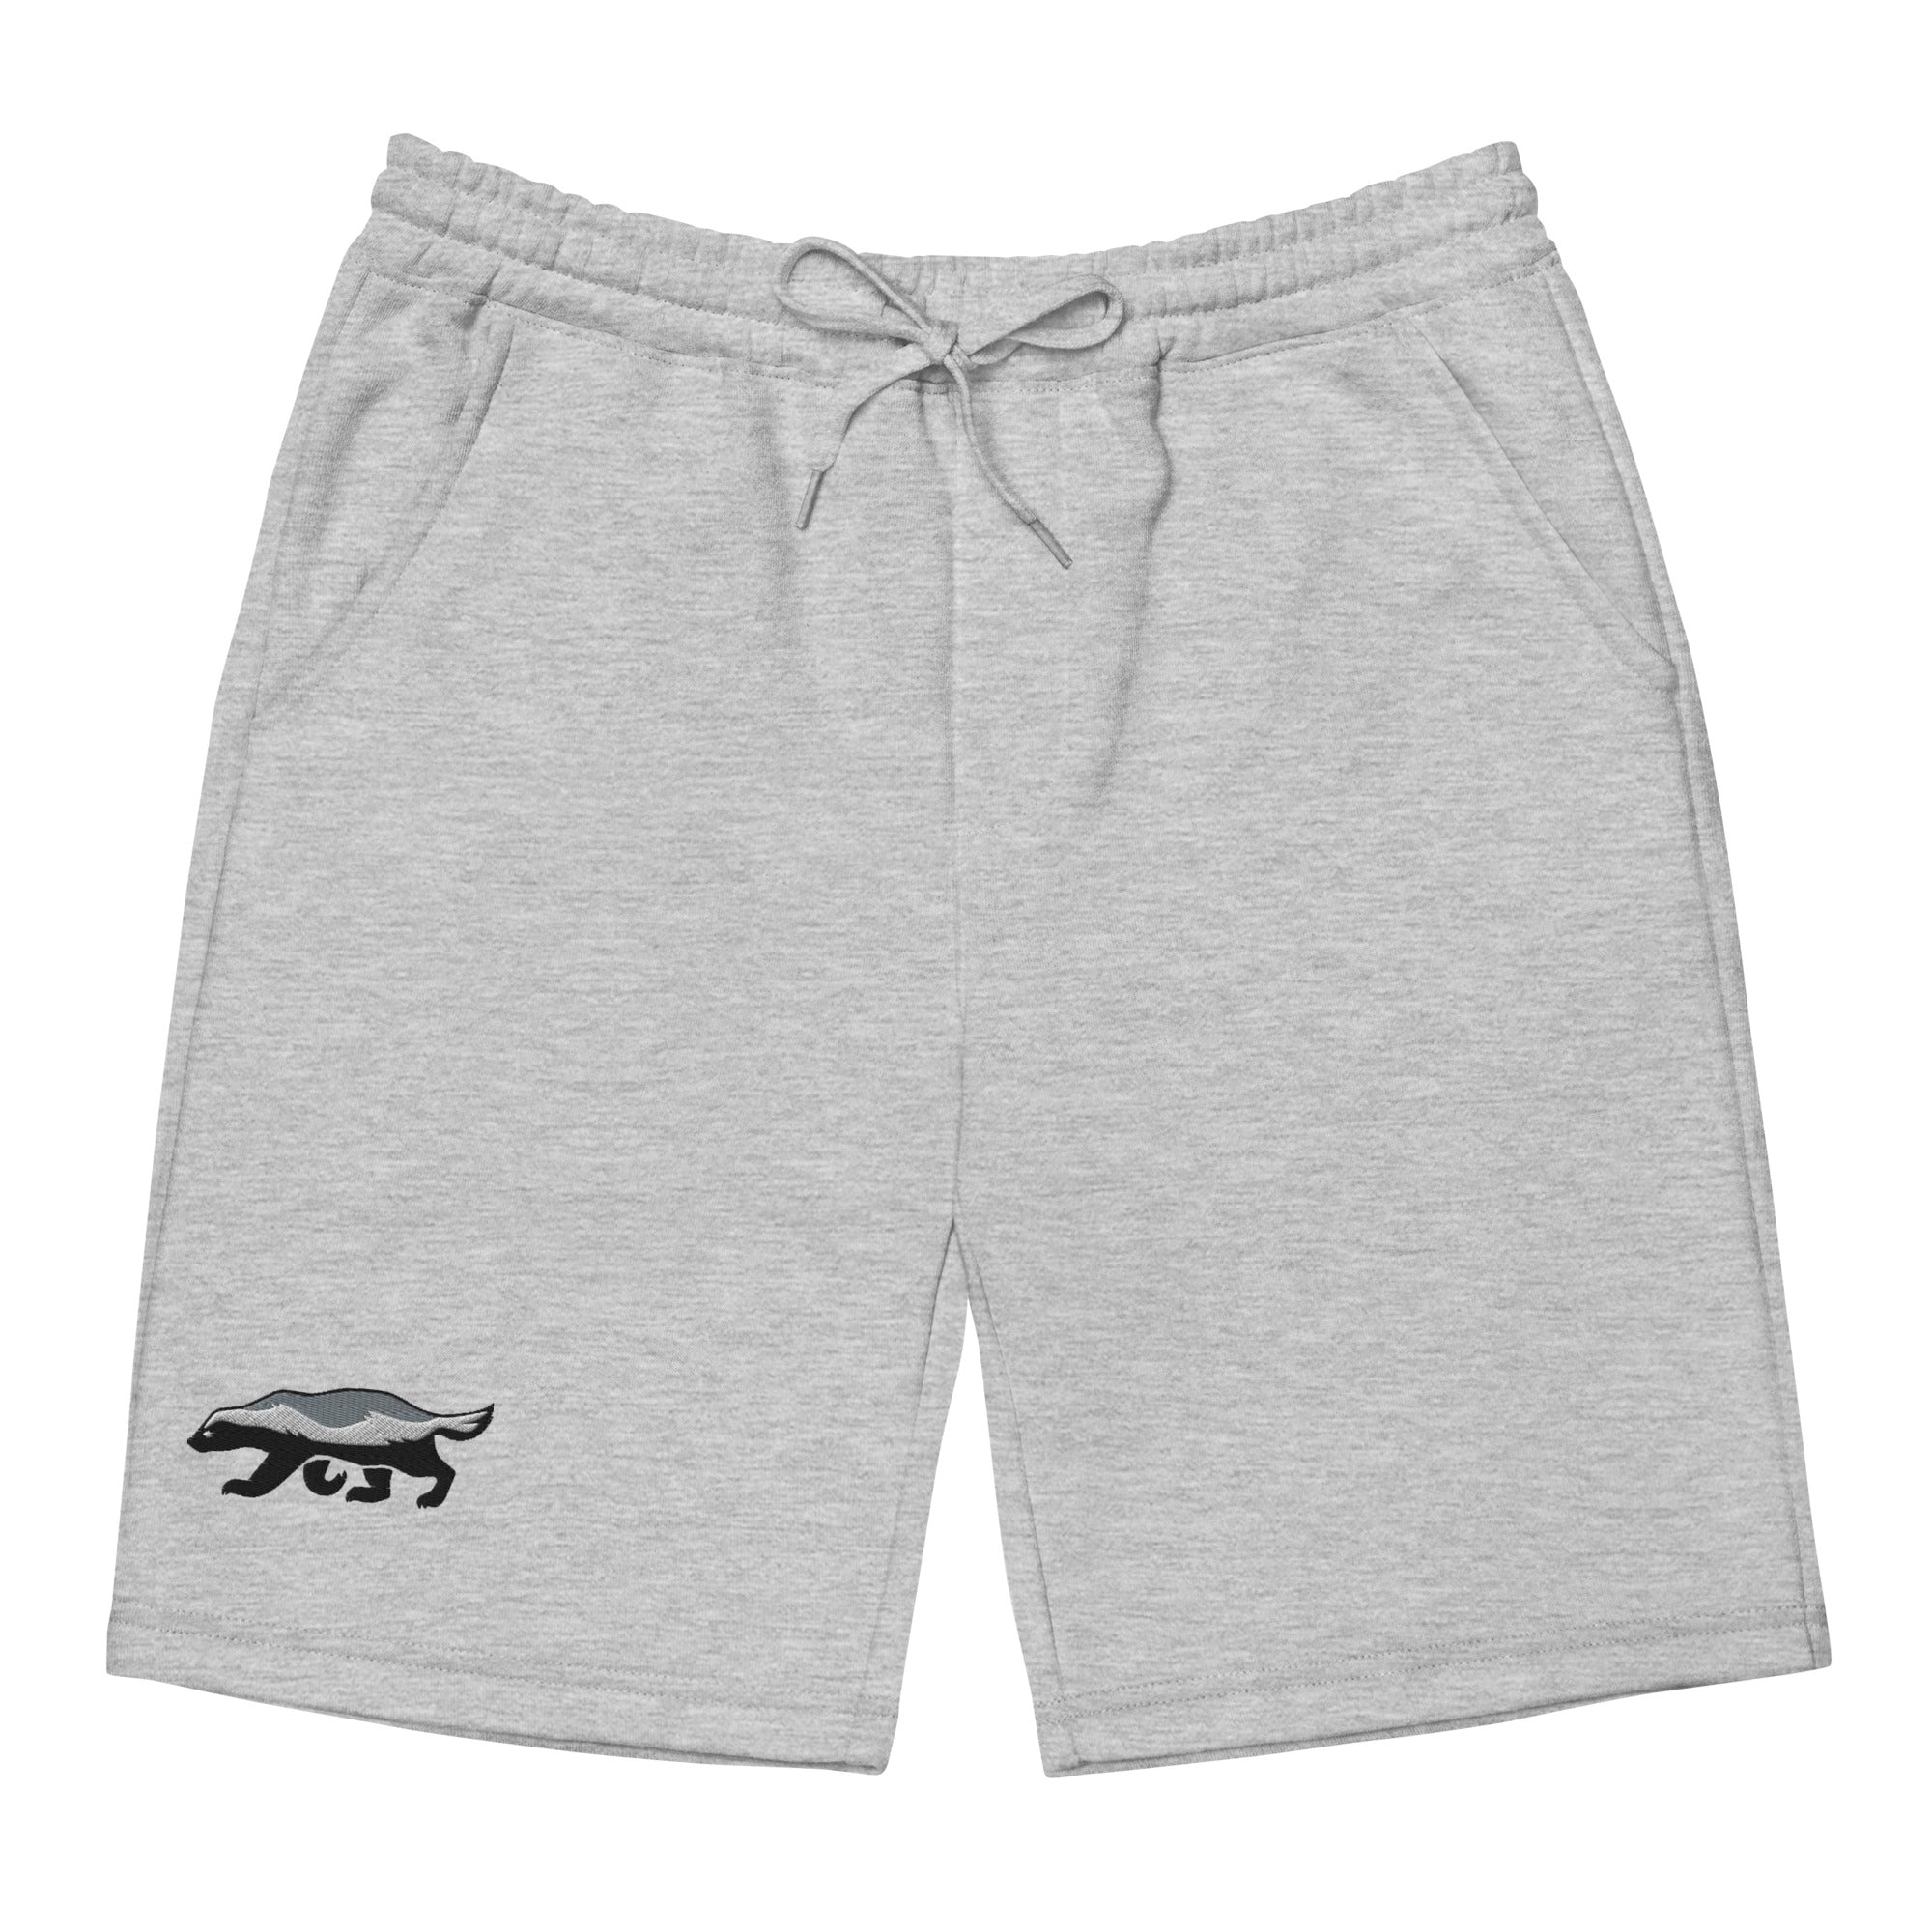 Honey Badger Embroidered Men's Fleece Shorts